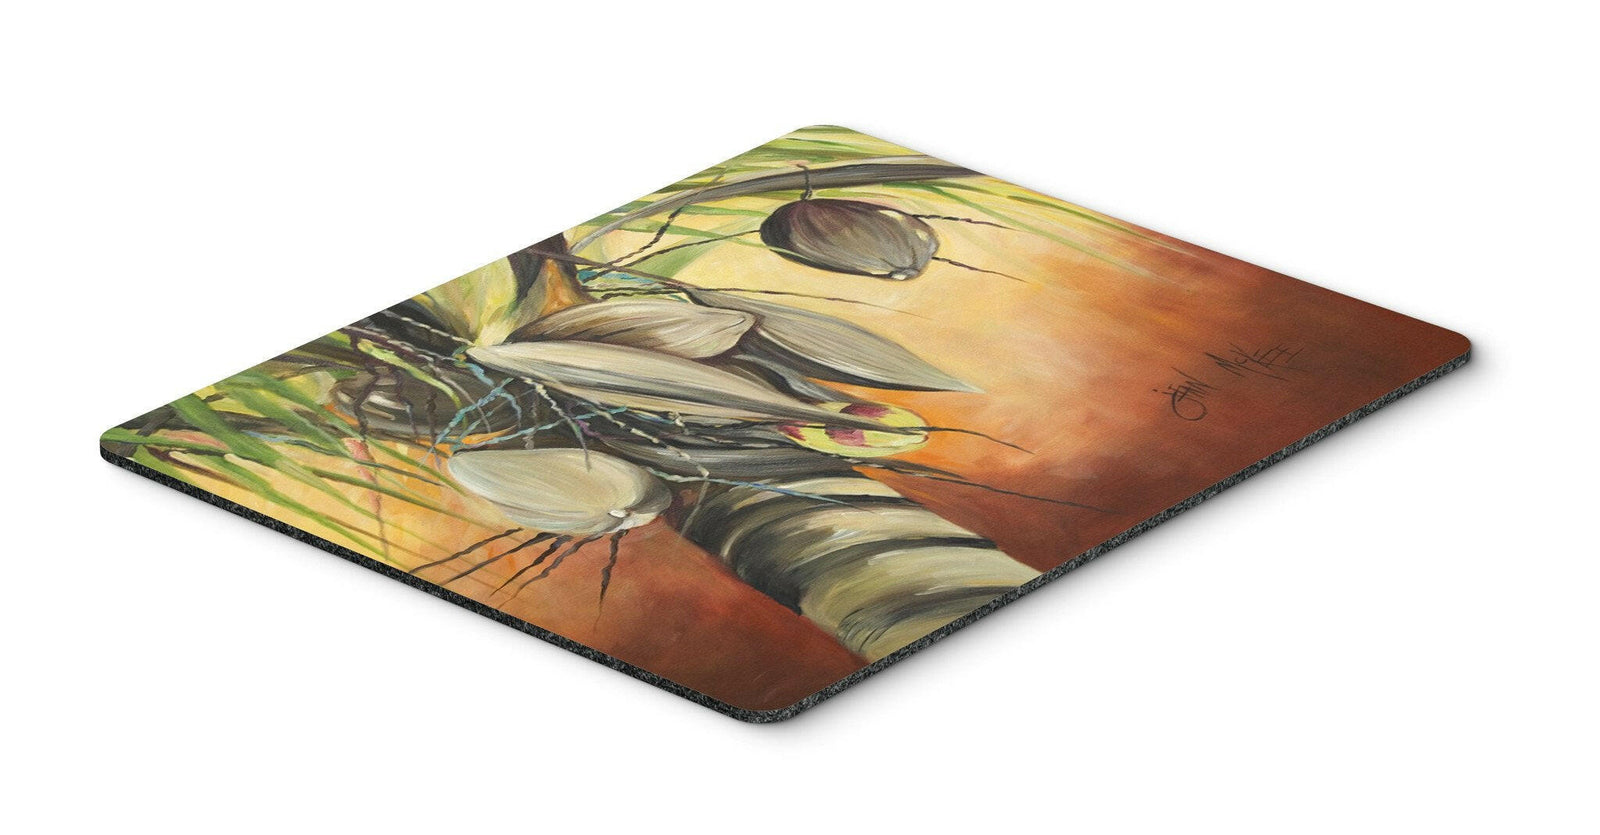 Coconut Tree Mouse Pad, Hot Pad or Trivet JMK1128MP by Caroline's Treasures